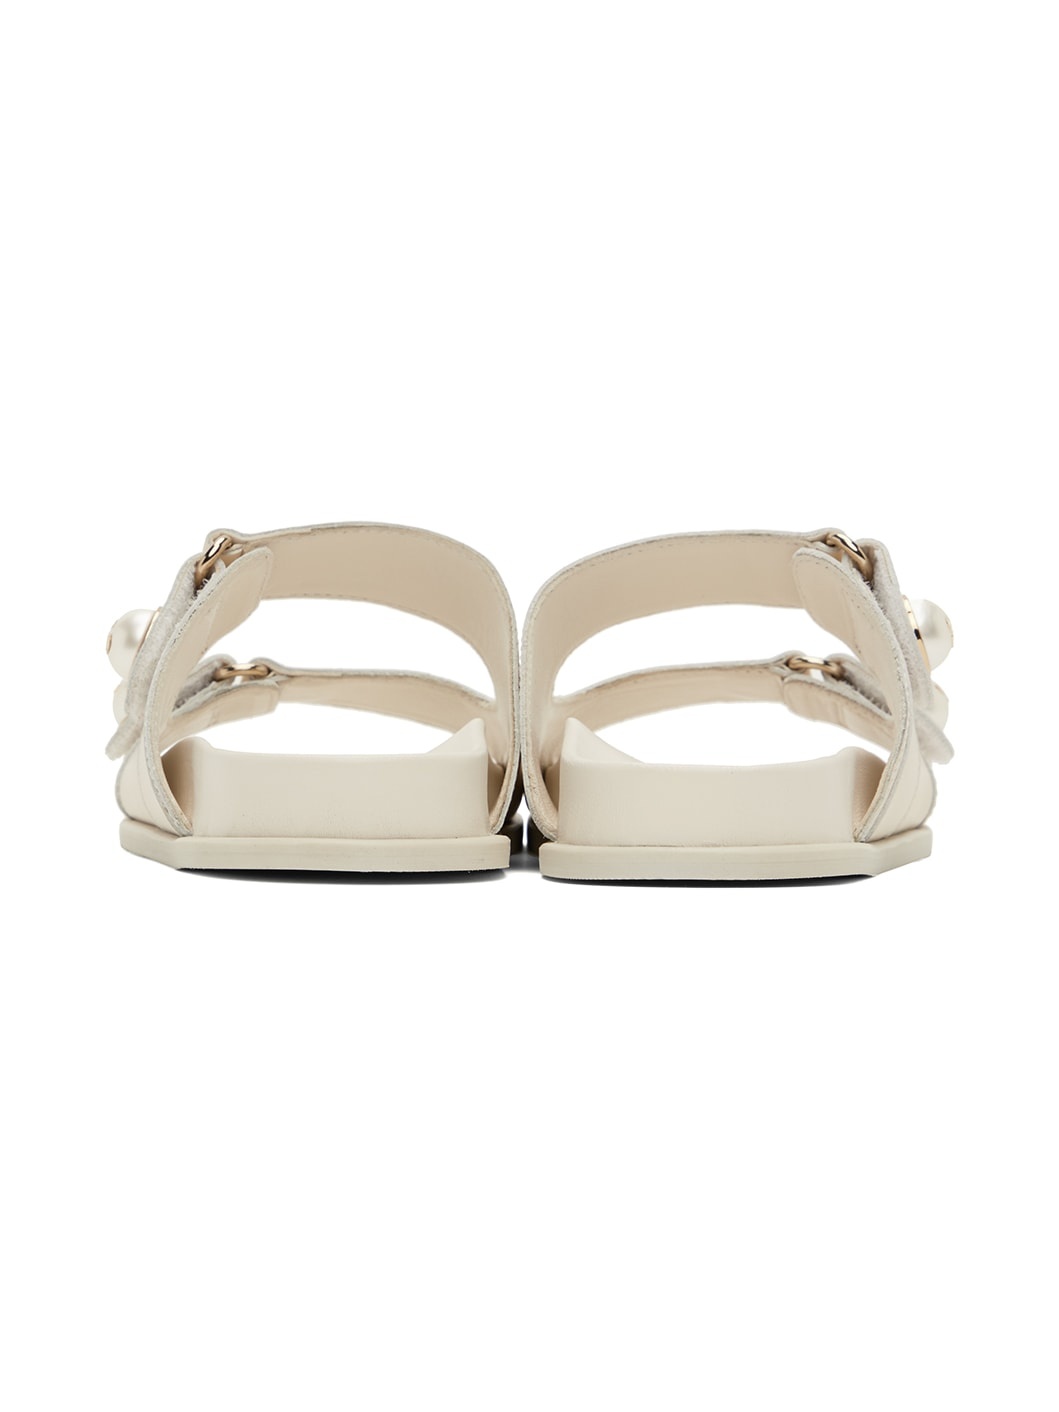 Off-White Fayence Sandals - 2